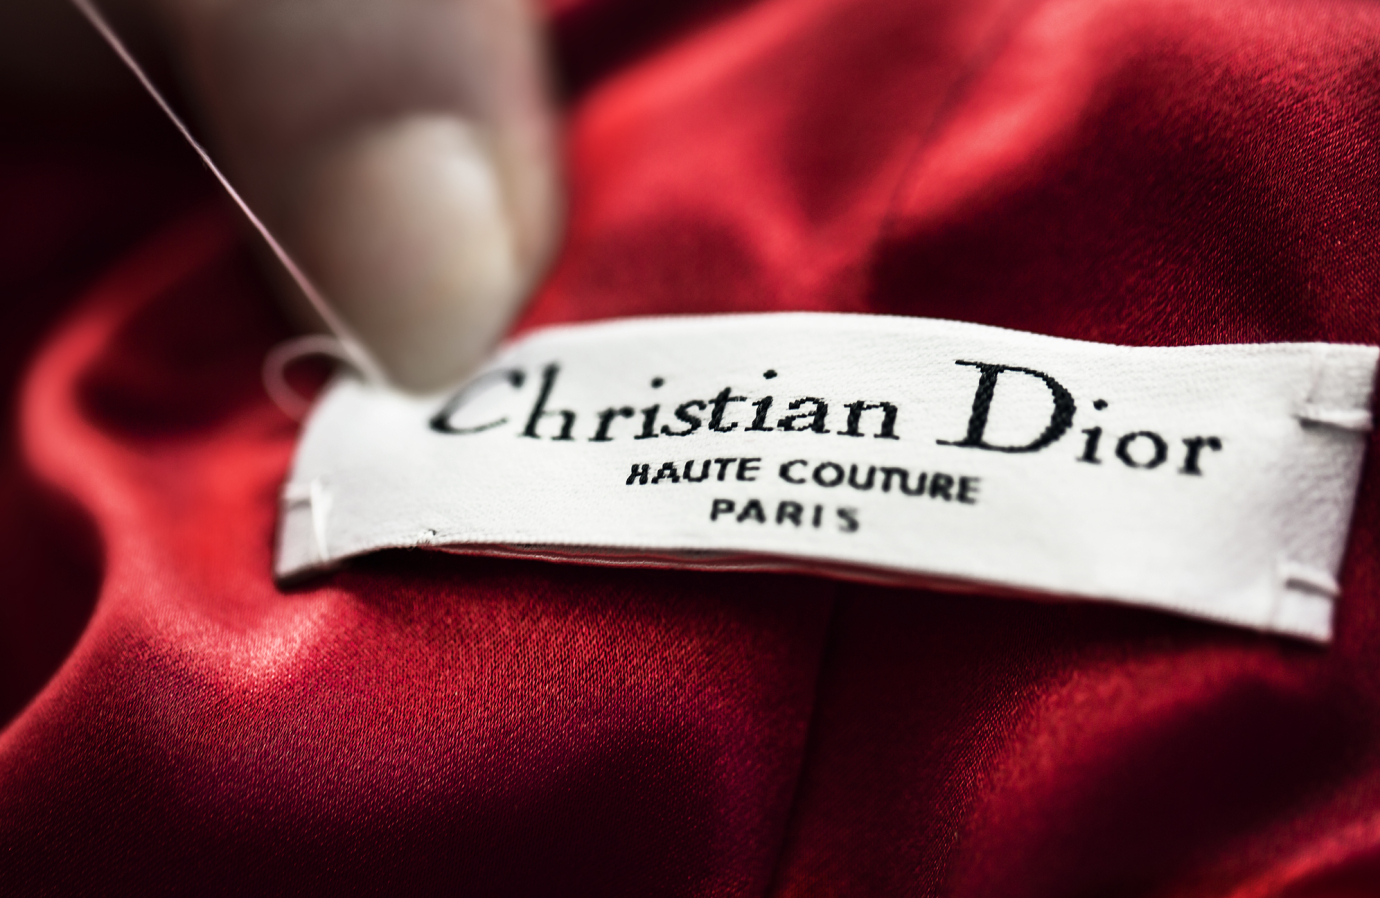 christian dior brands